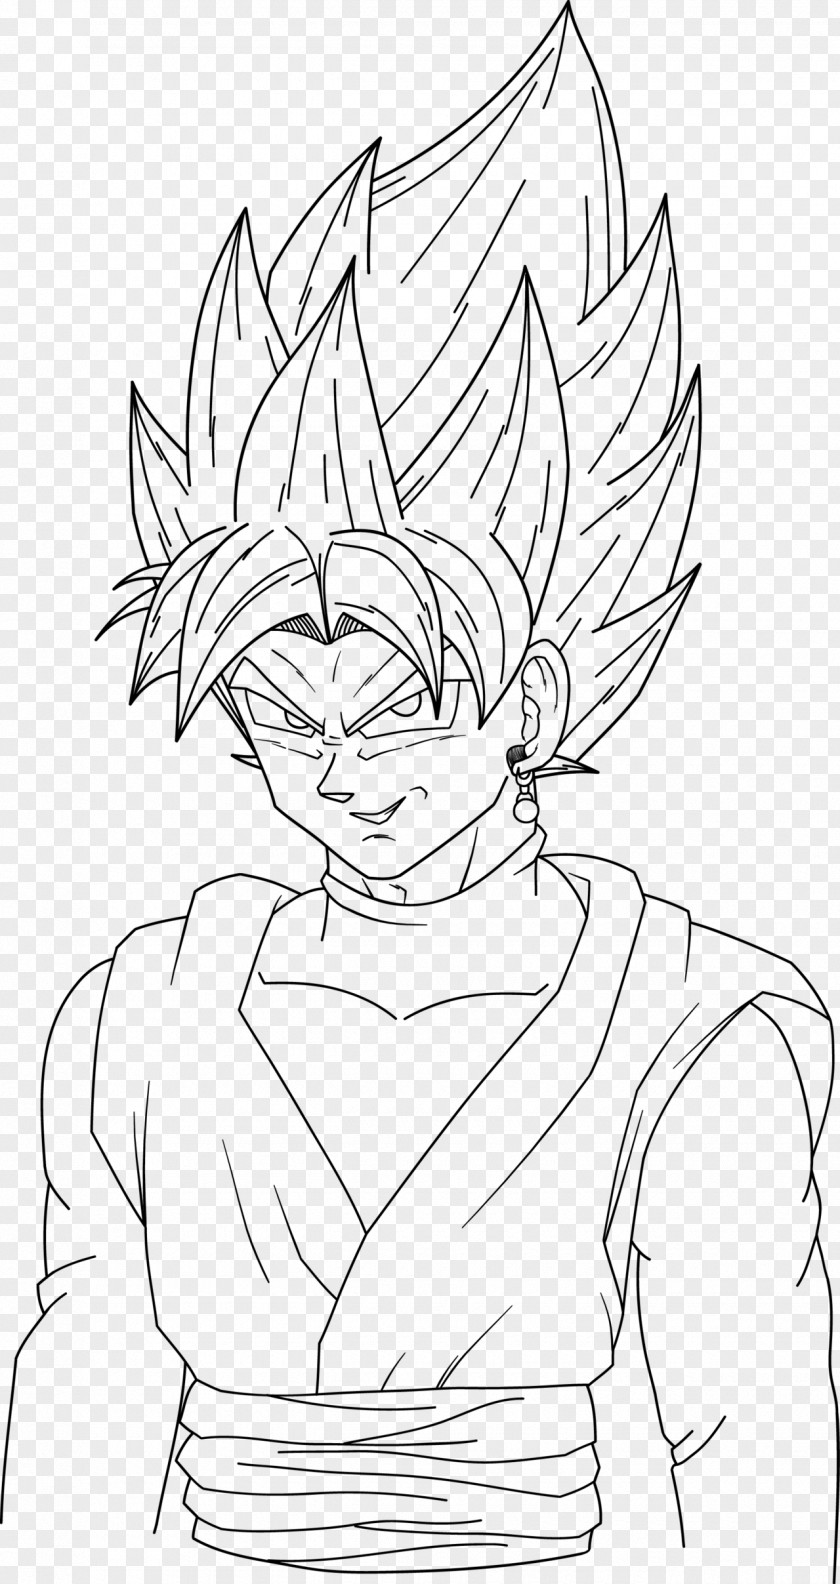 Goku Trunks Vegeta Majin Buu Line Art PNG